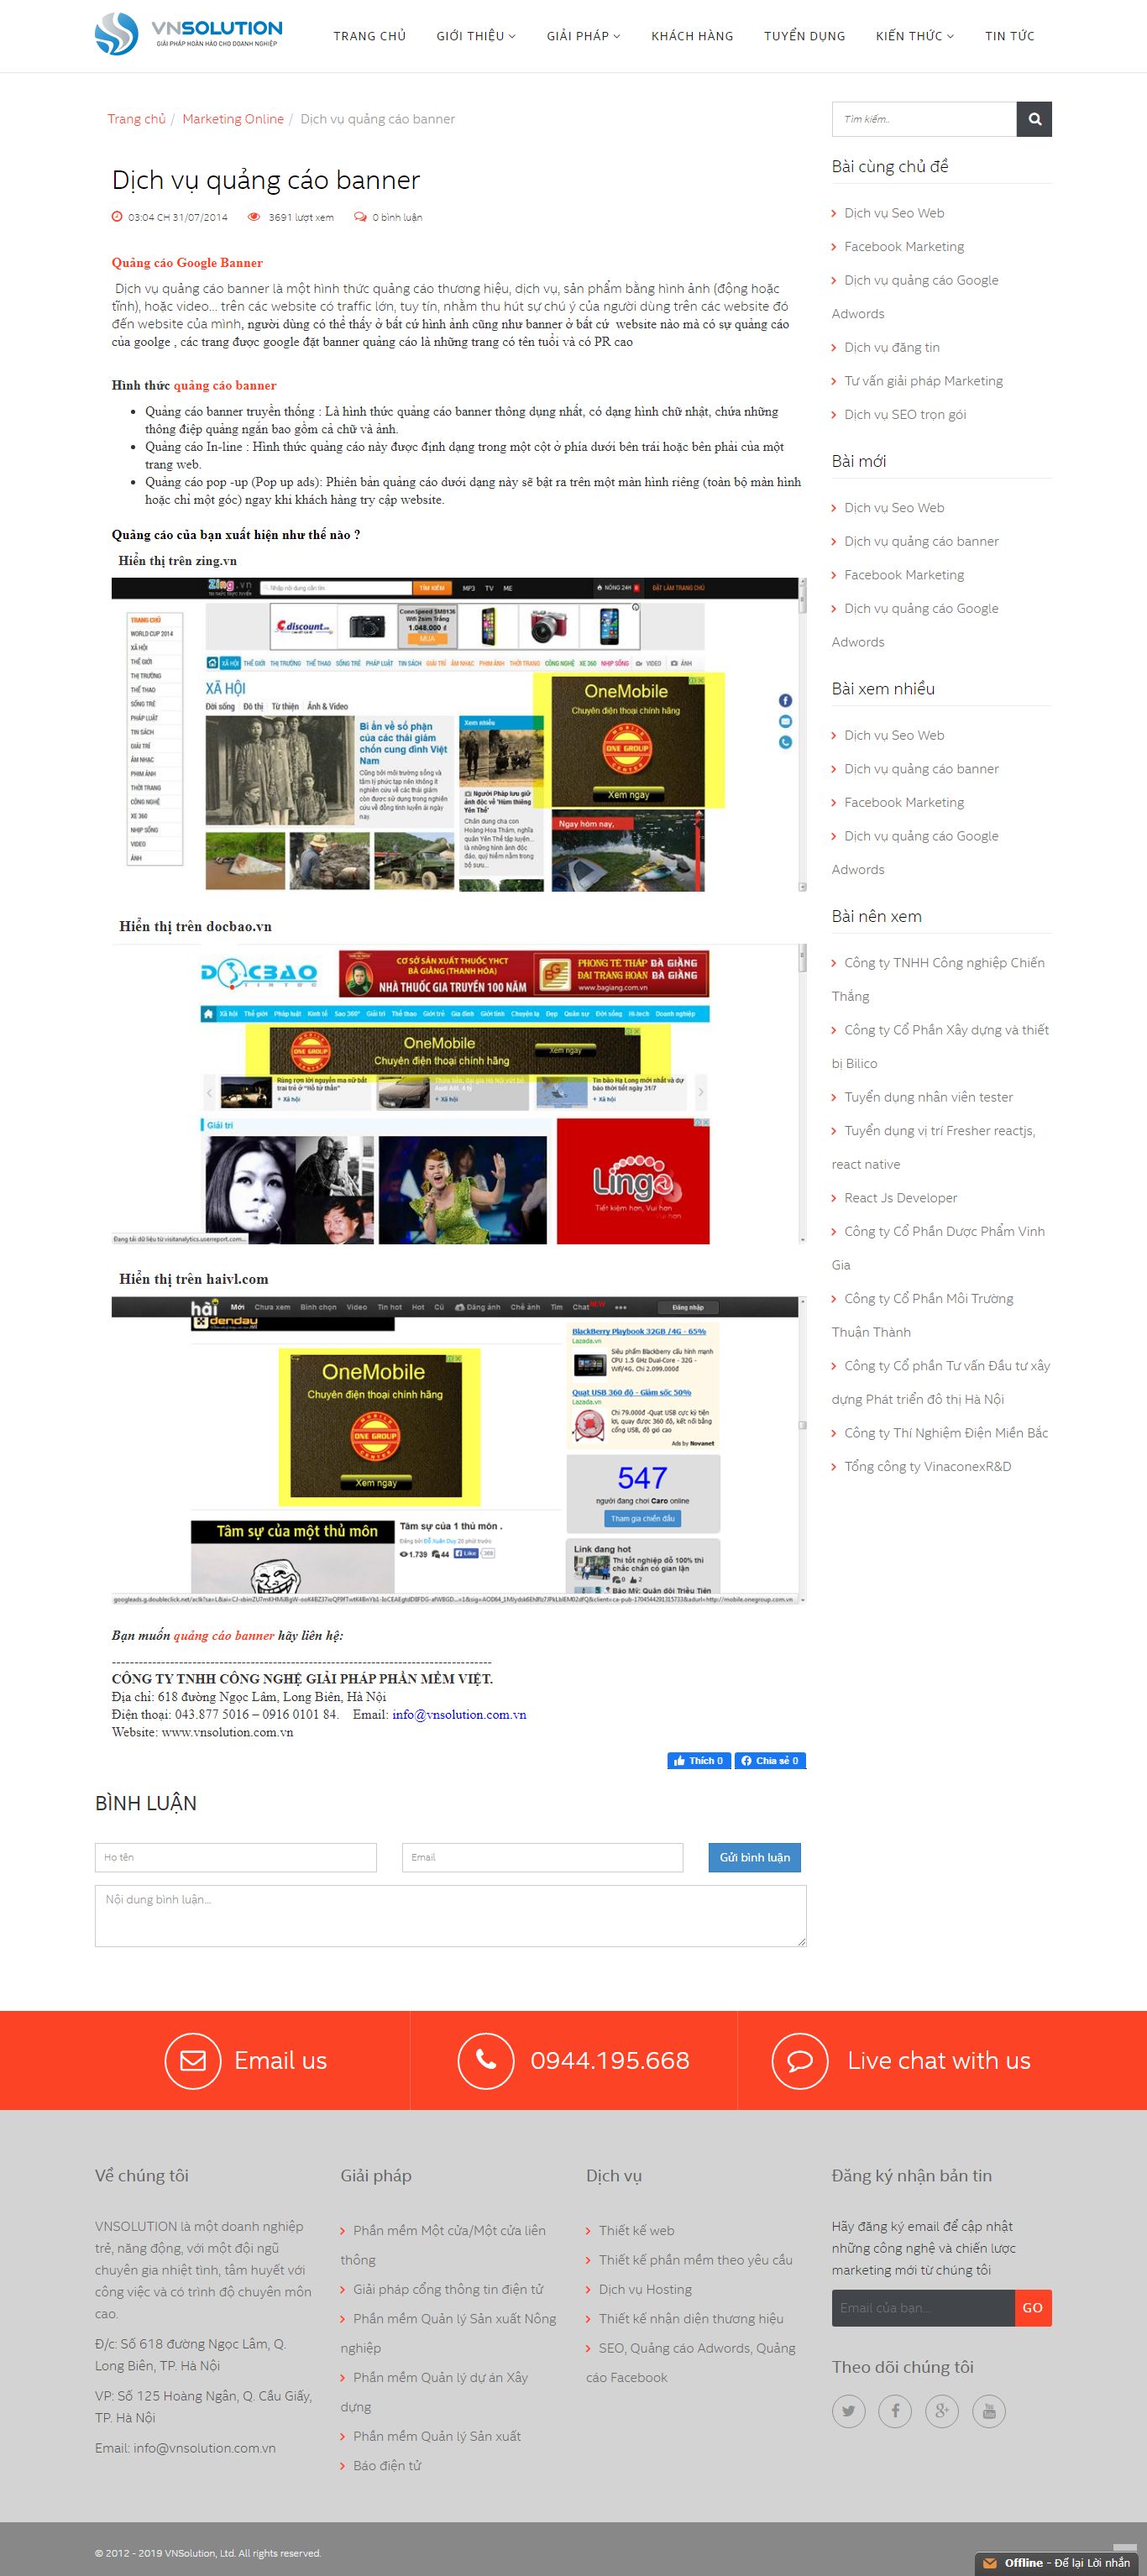 Thiết kế Website quảng cáo banner - vnsolution.com.vn